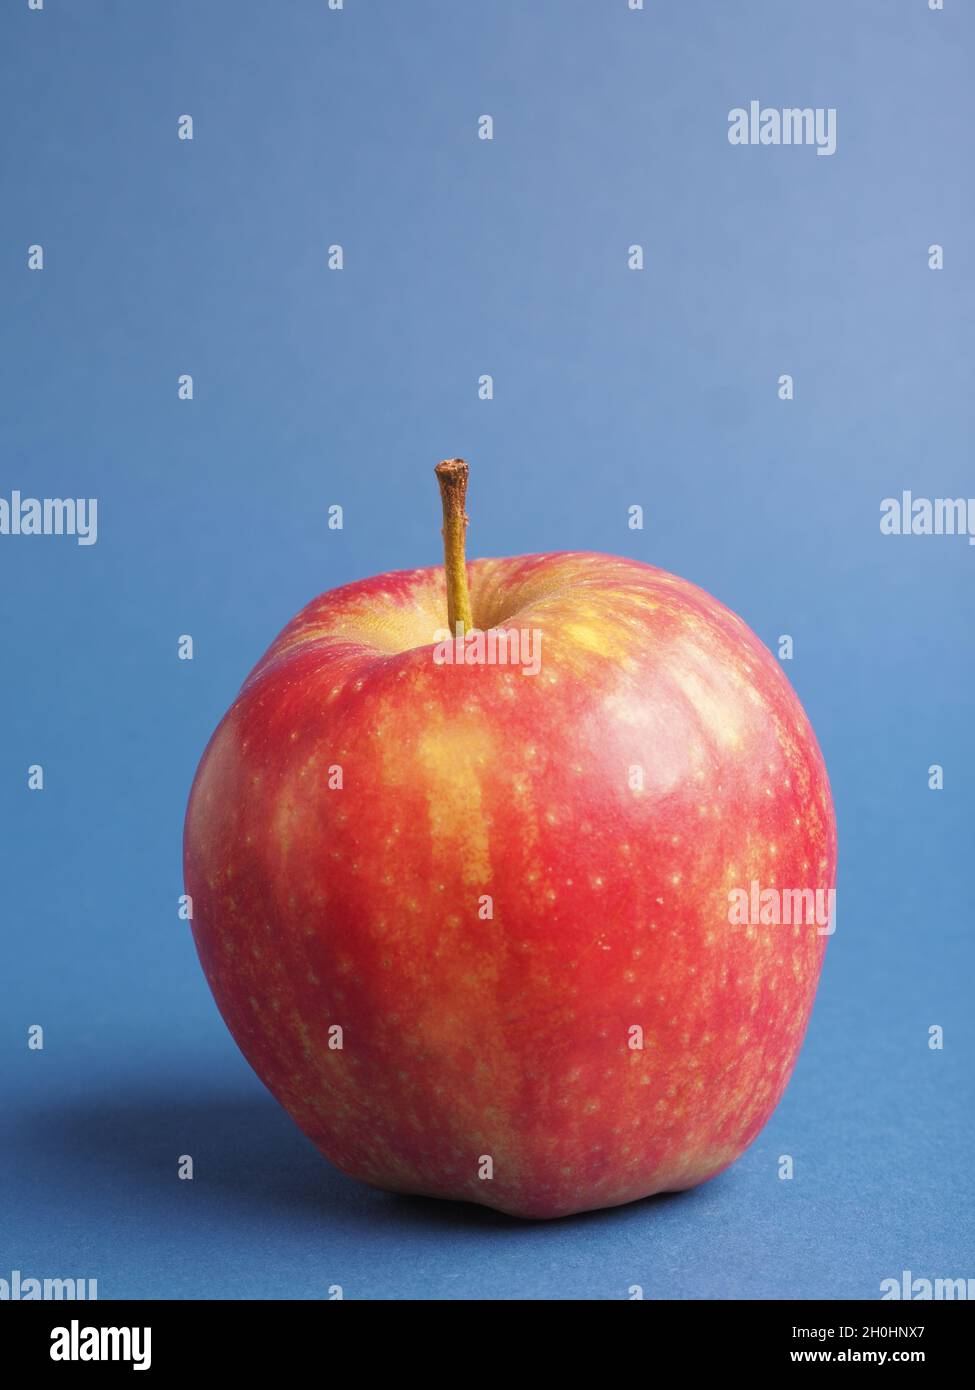 One fresh red organic apple on a blue studio background, horizontal  landscape view Stock Photo - Alamy